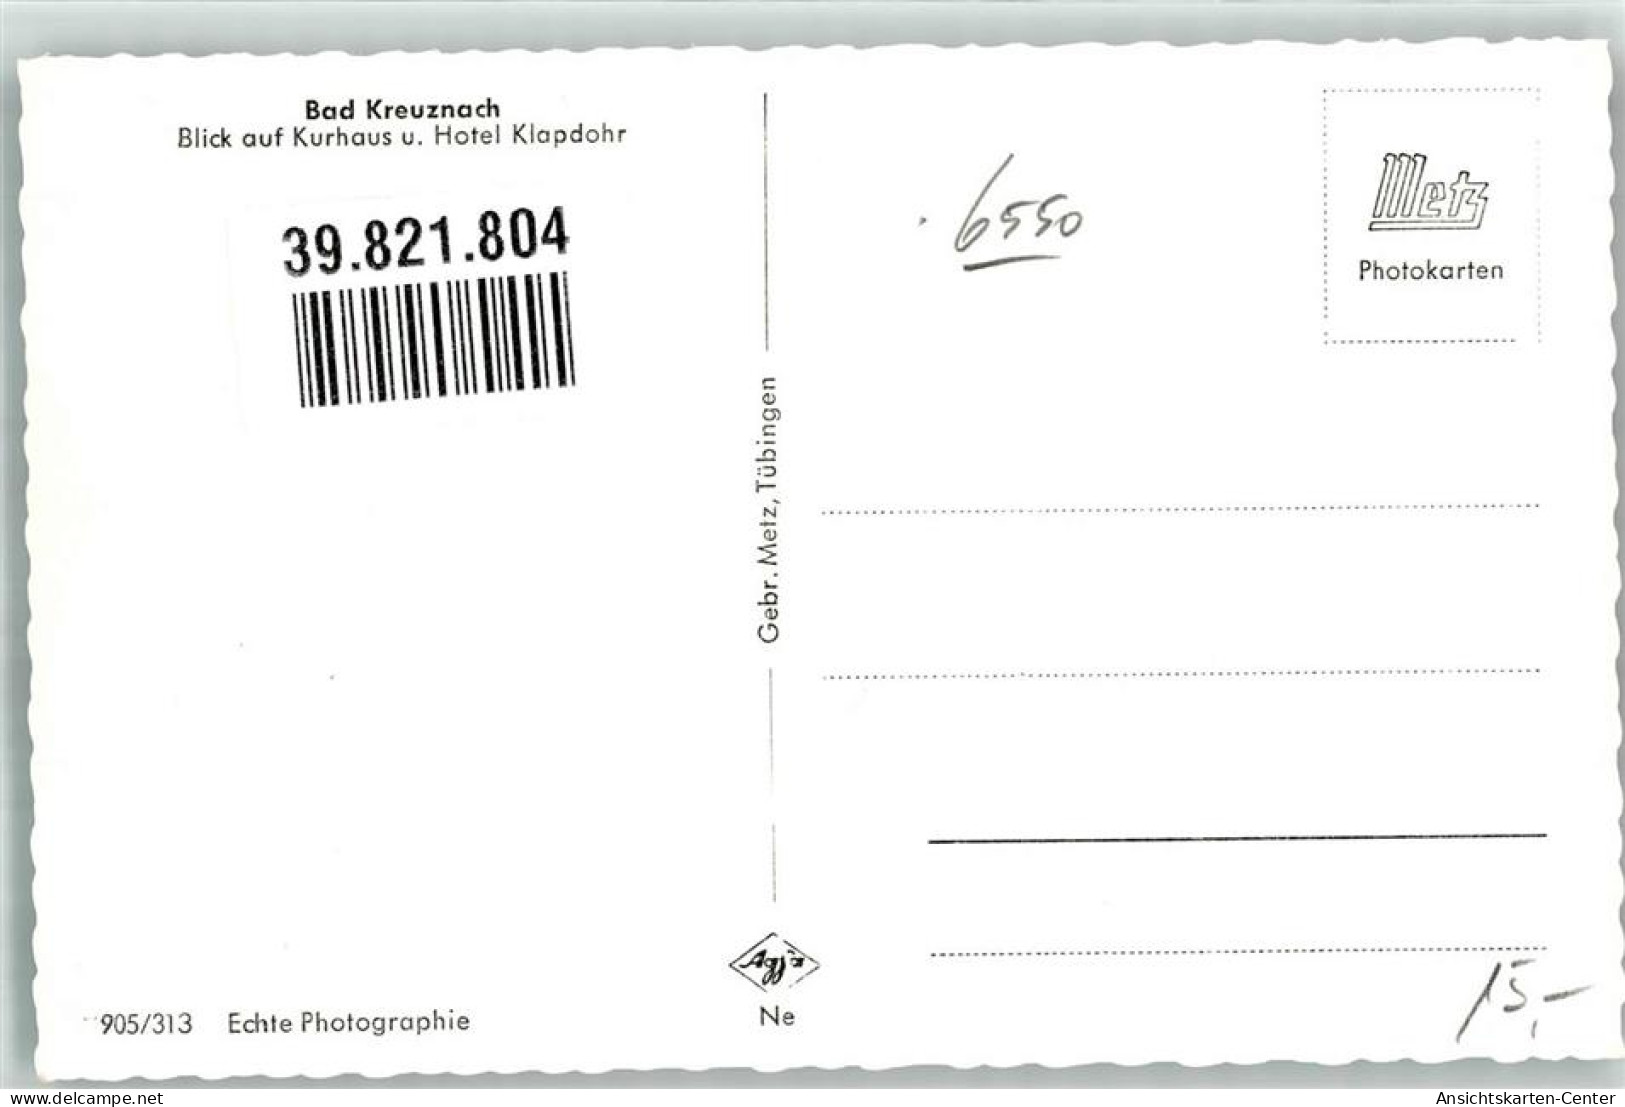 39821804 - Bad Kreuznach - Bad Kreuznach